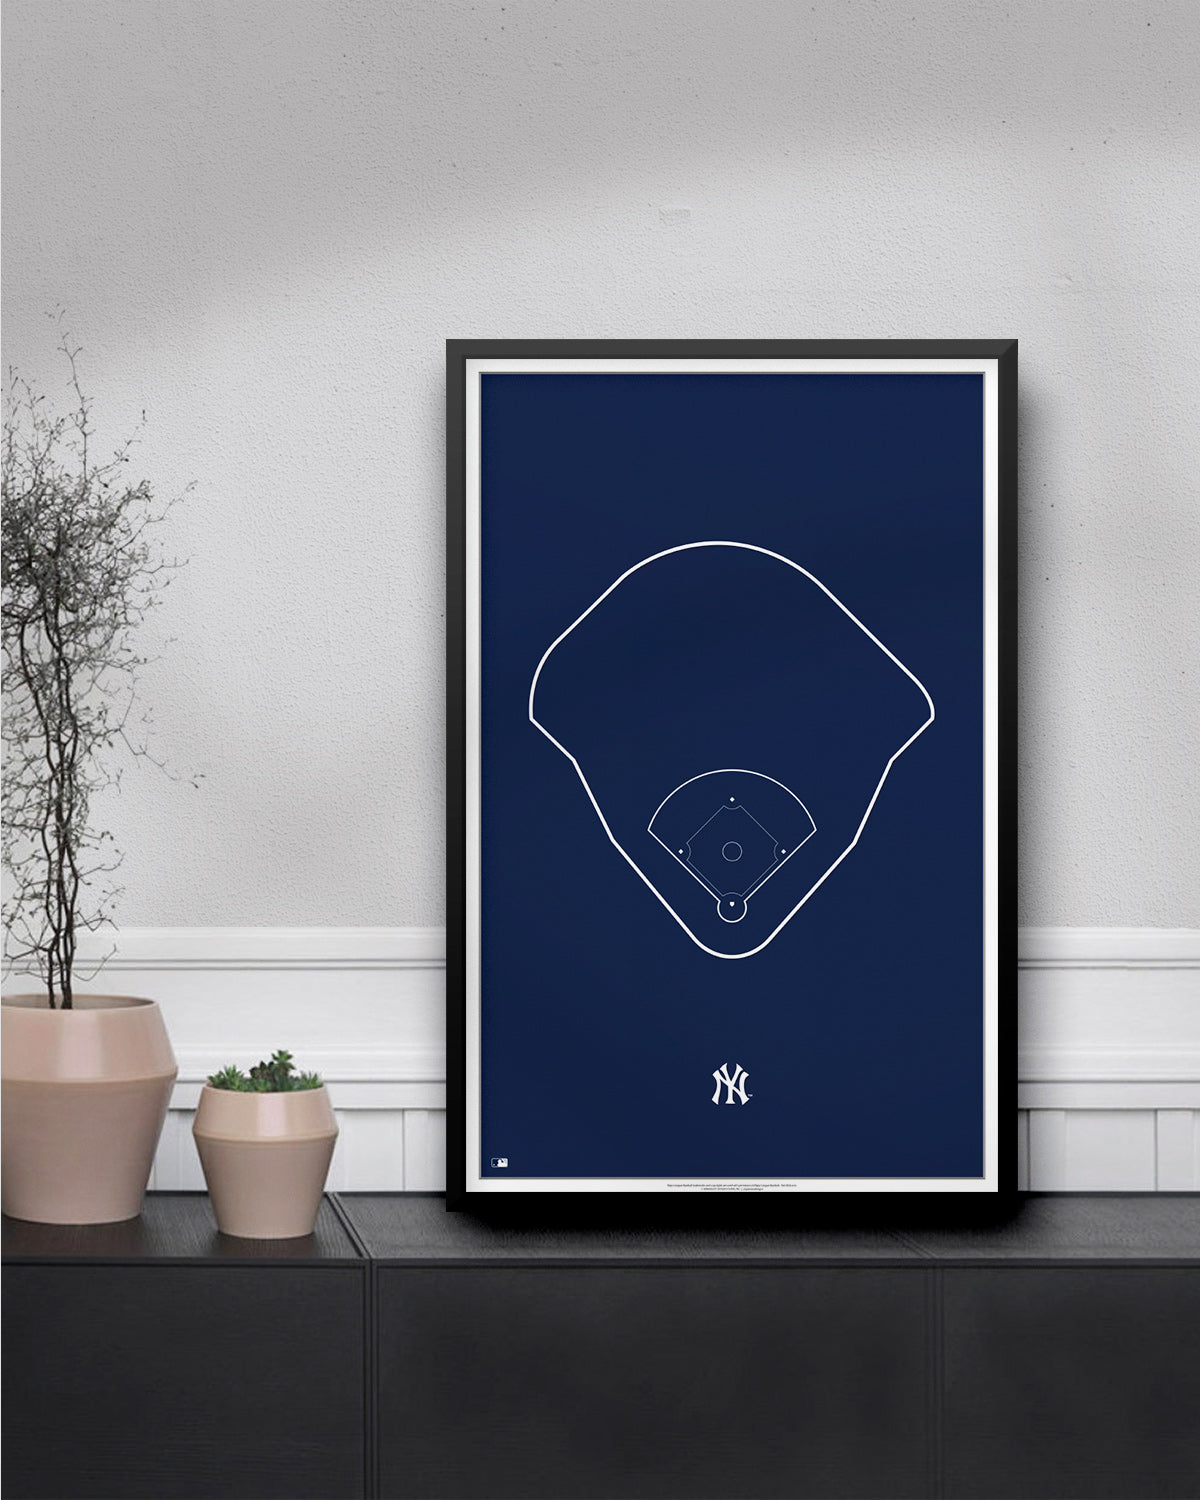 MLB Outline Ballpark - Yankee Stadium New York Yankees - S Preston